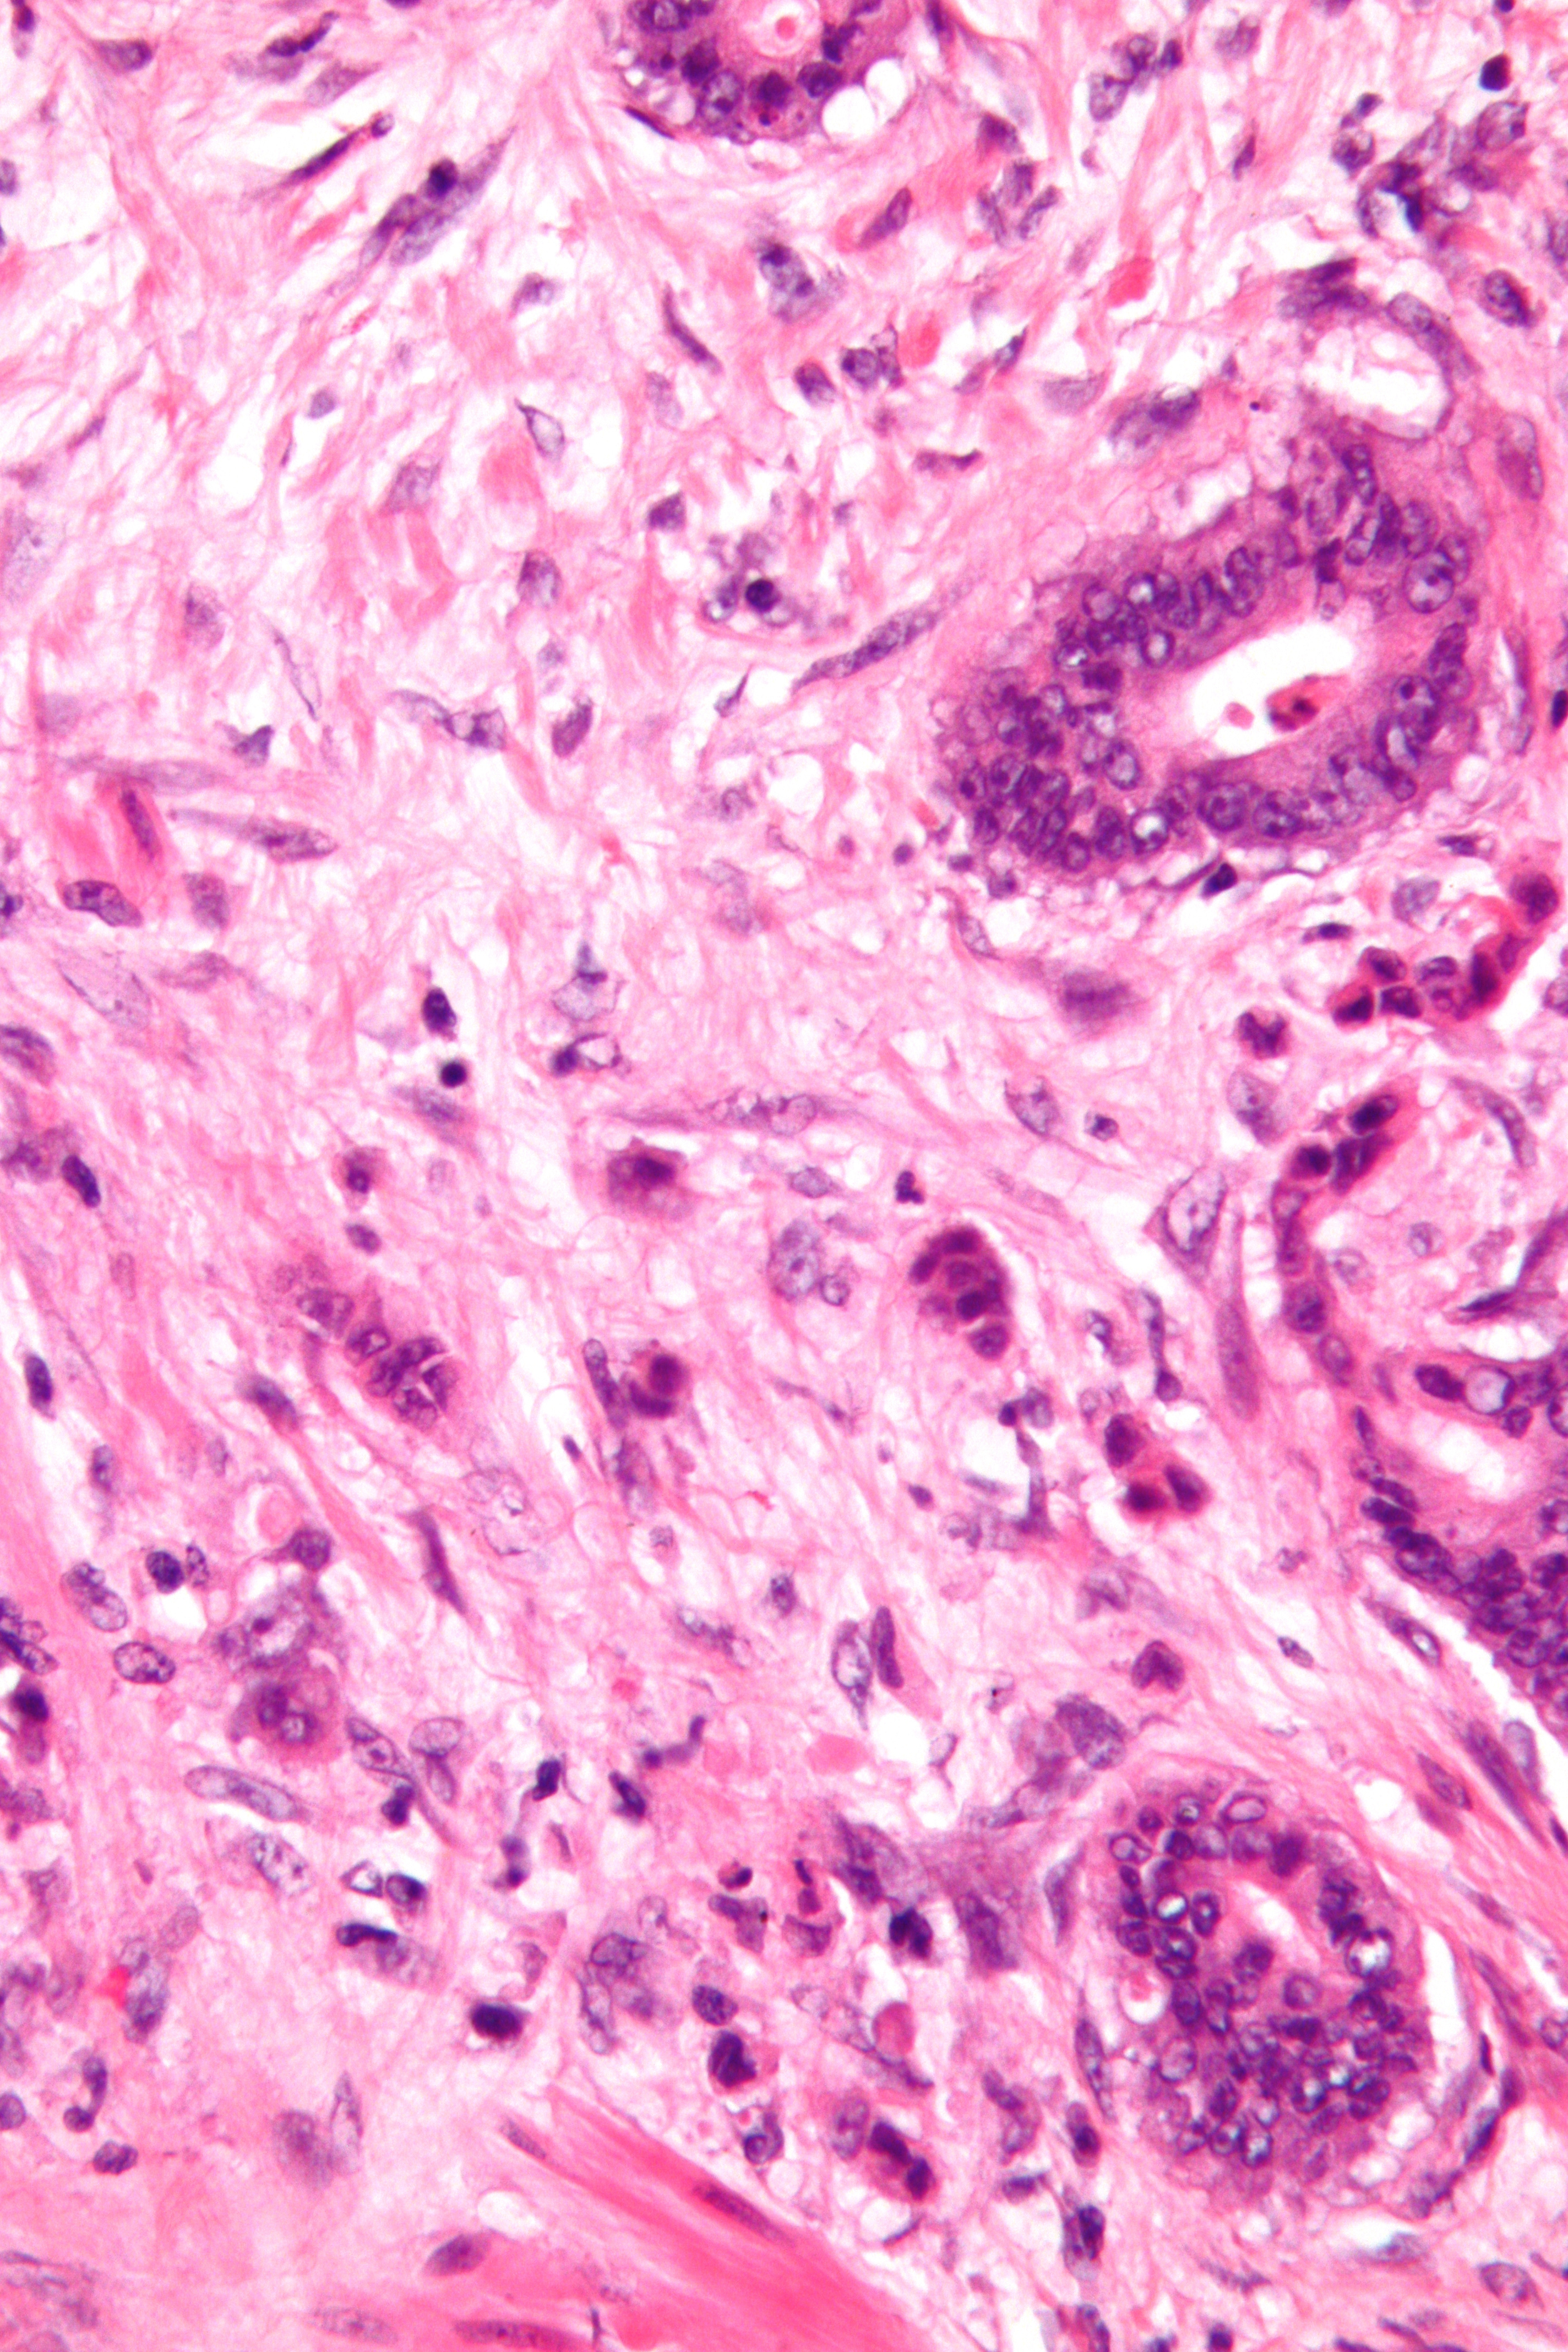 Colon cancer cells. (Source: Wikimedia/Nephron)